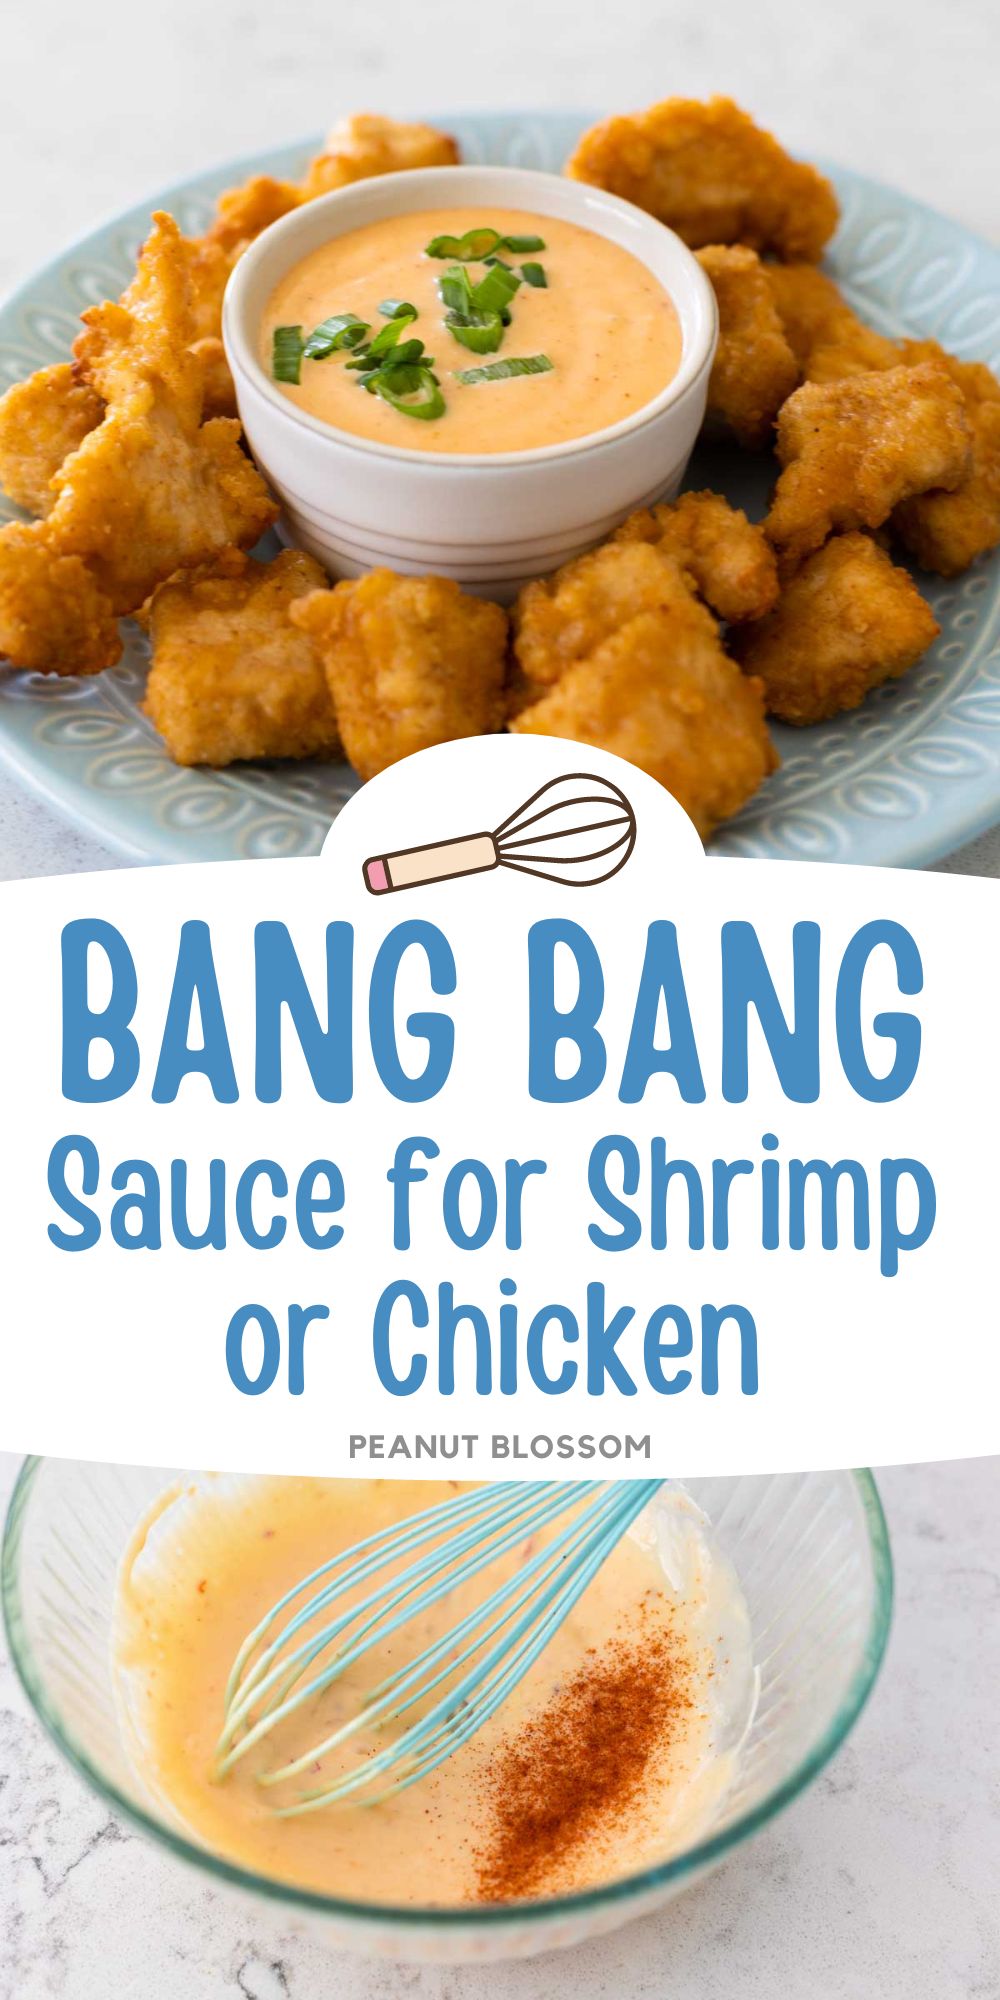 A platter of chicken nuggets has a cup of bang bang sauce. Bottom photo shows the bang bang sauce being whisked together.